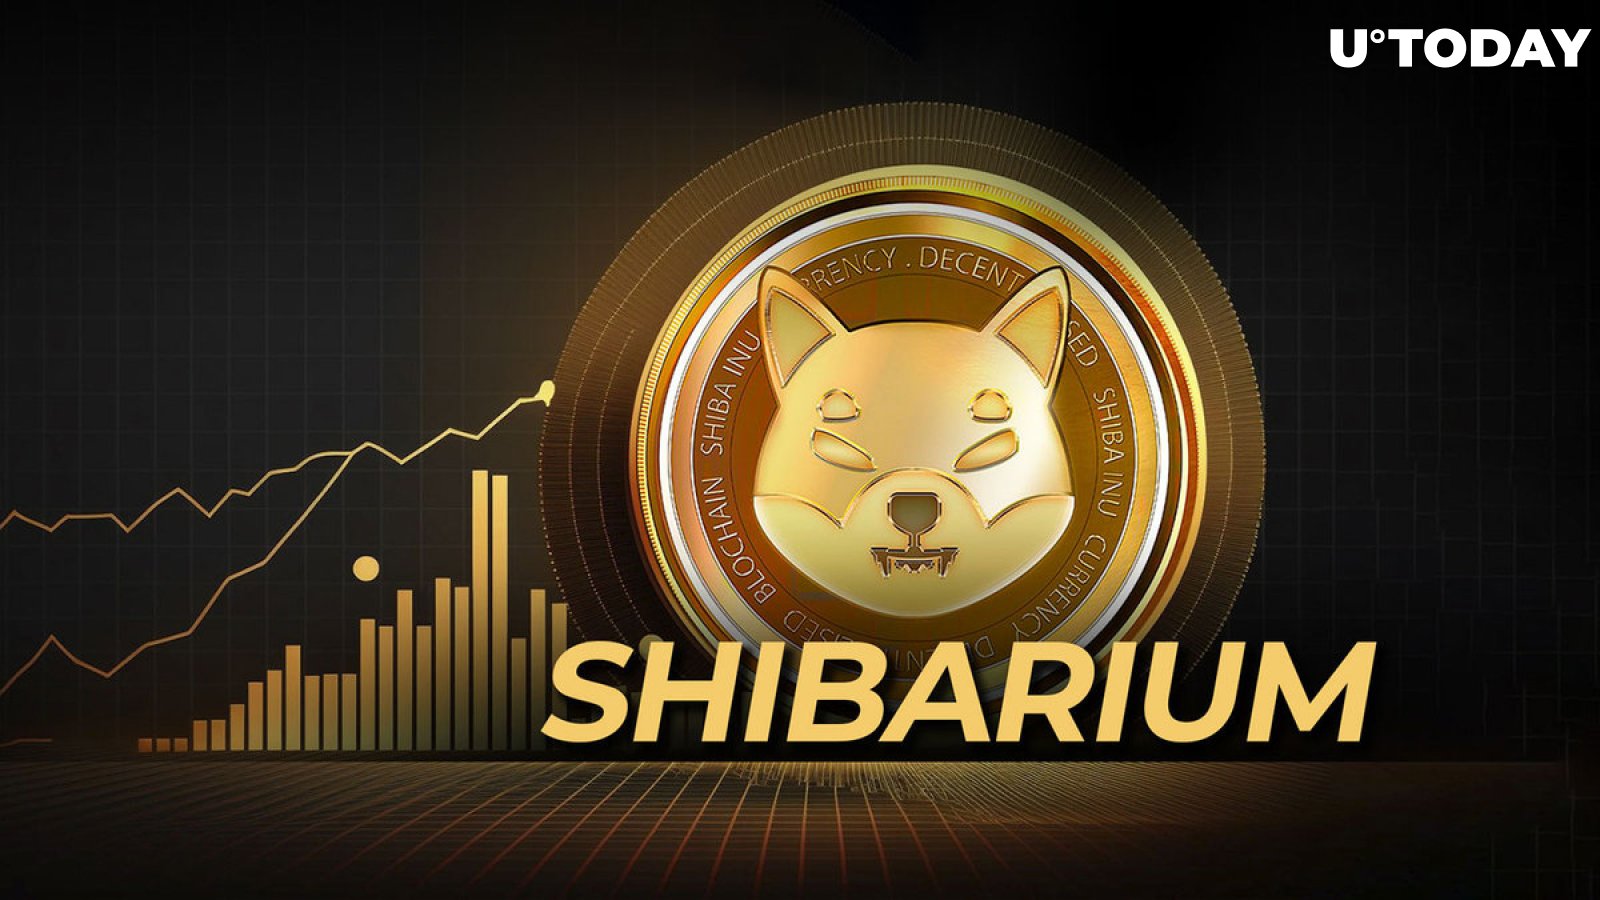 Shibarium Saw 1.7 Million Transaction Spike in Last 24 Hours